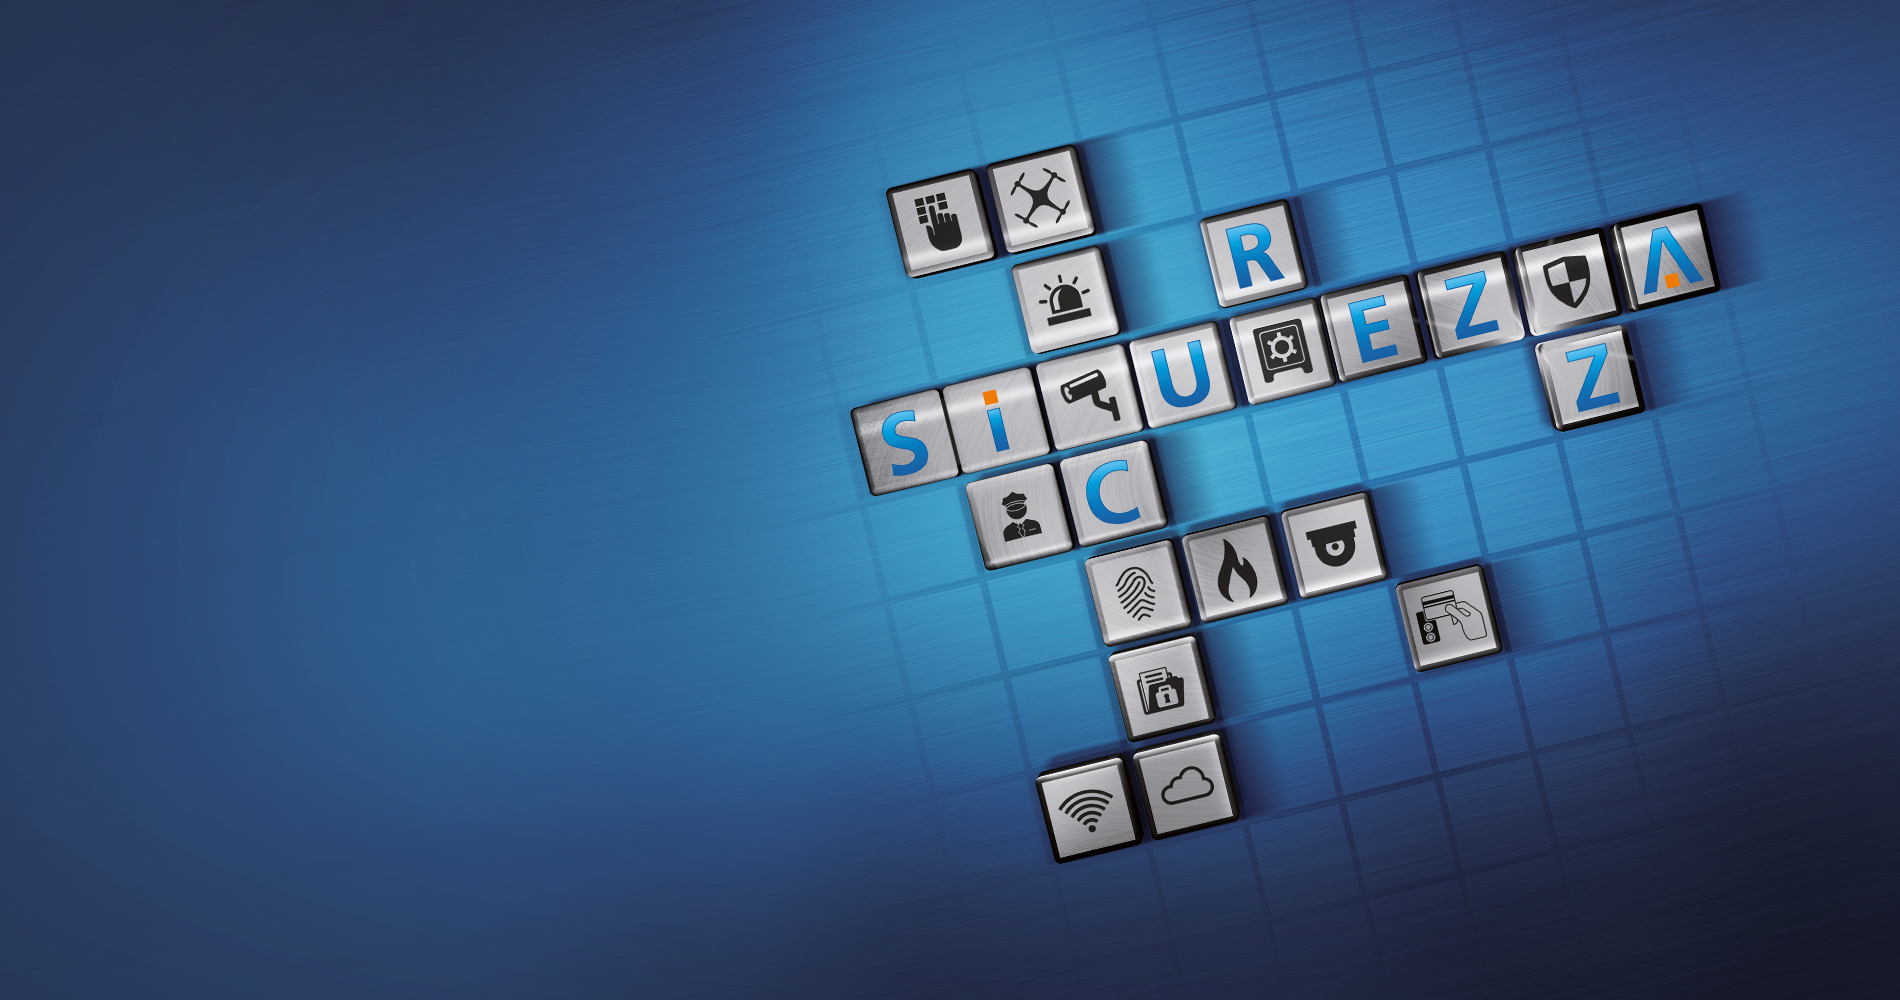 Microsoft Sudoku - News